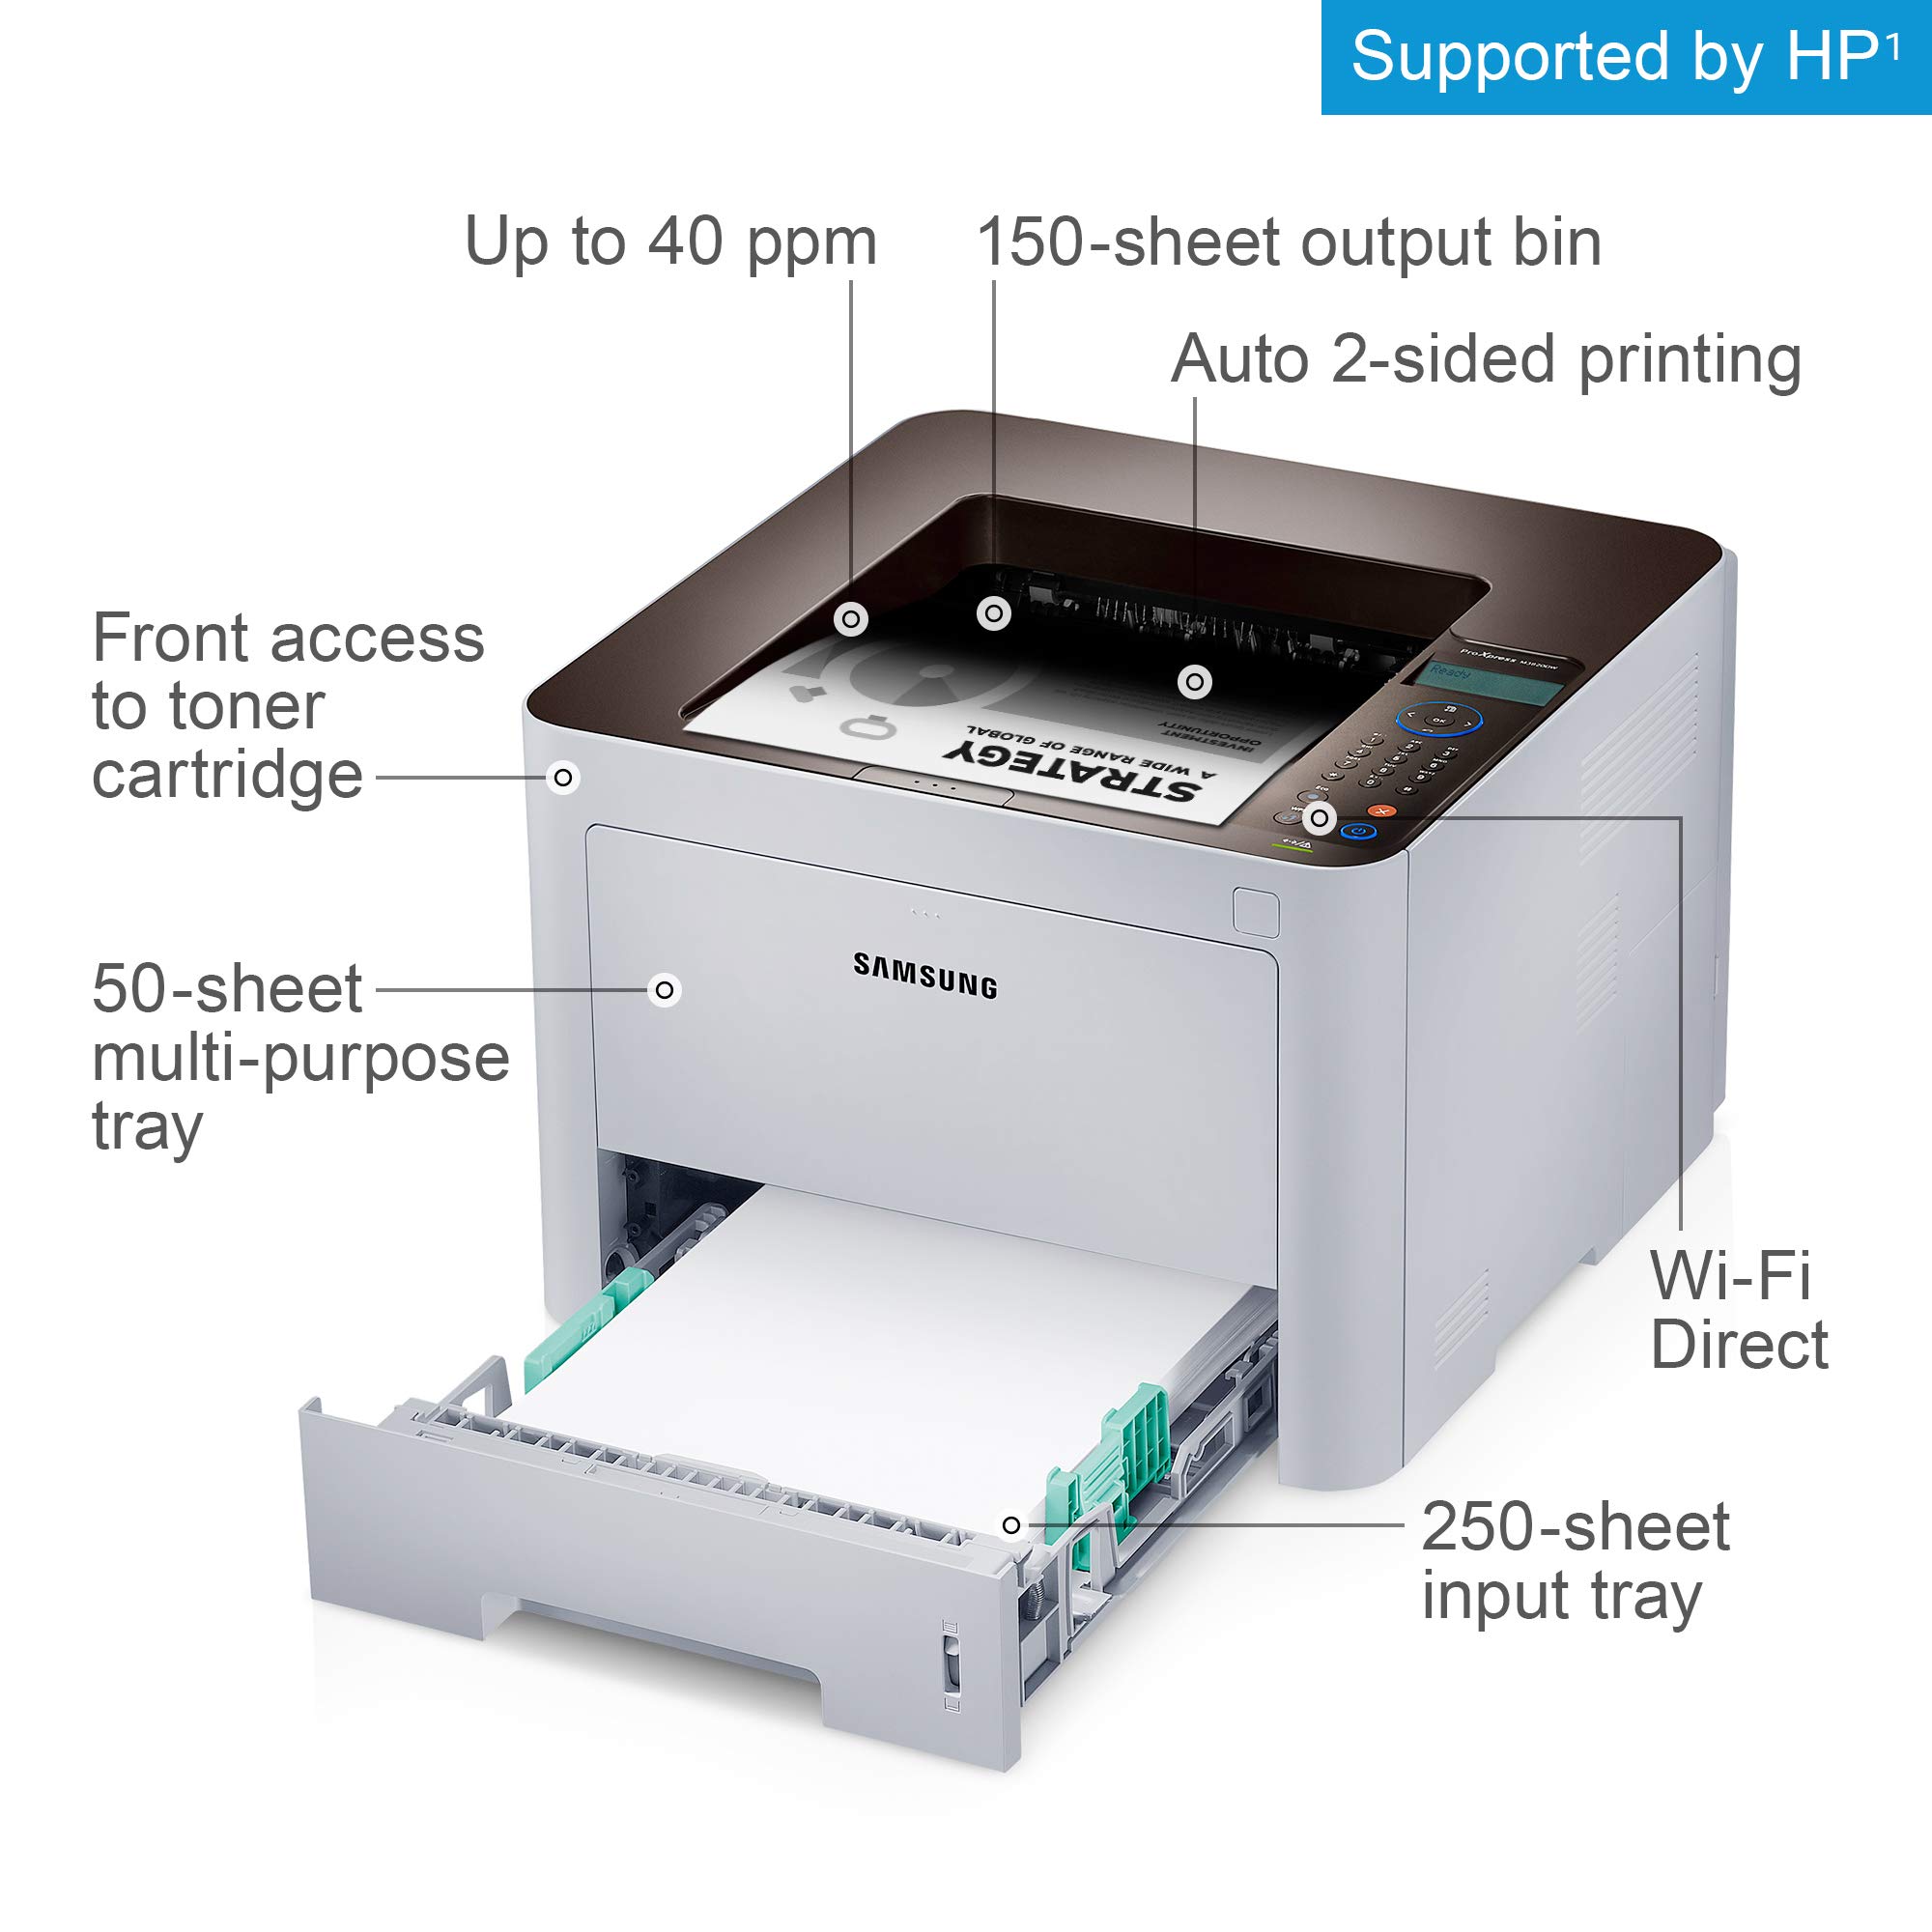 Samsung ProXpress SL-M3825 Laser Printer series